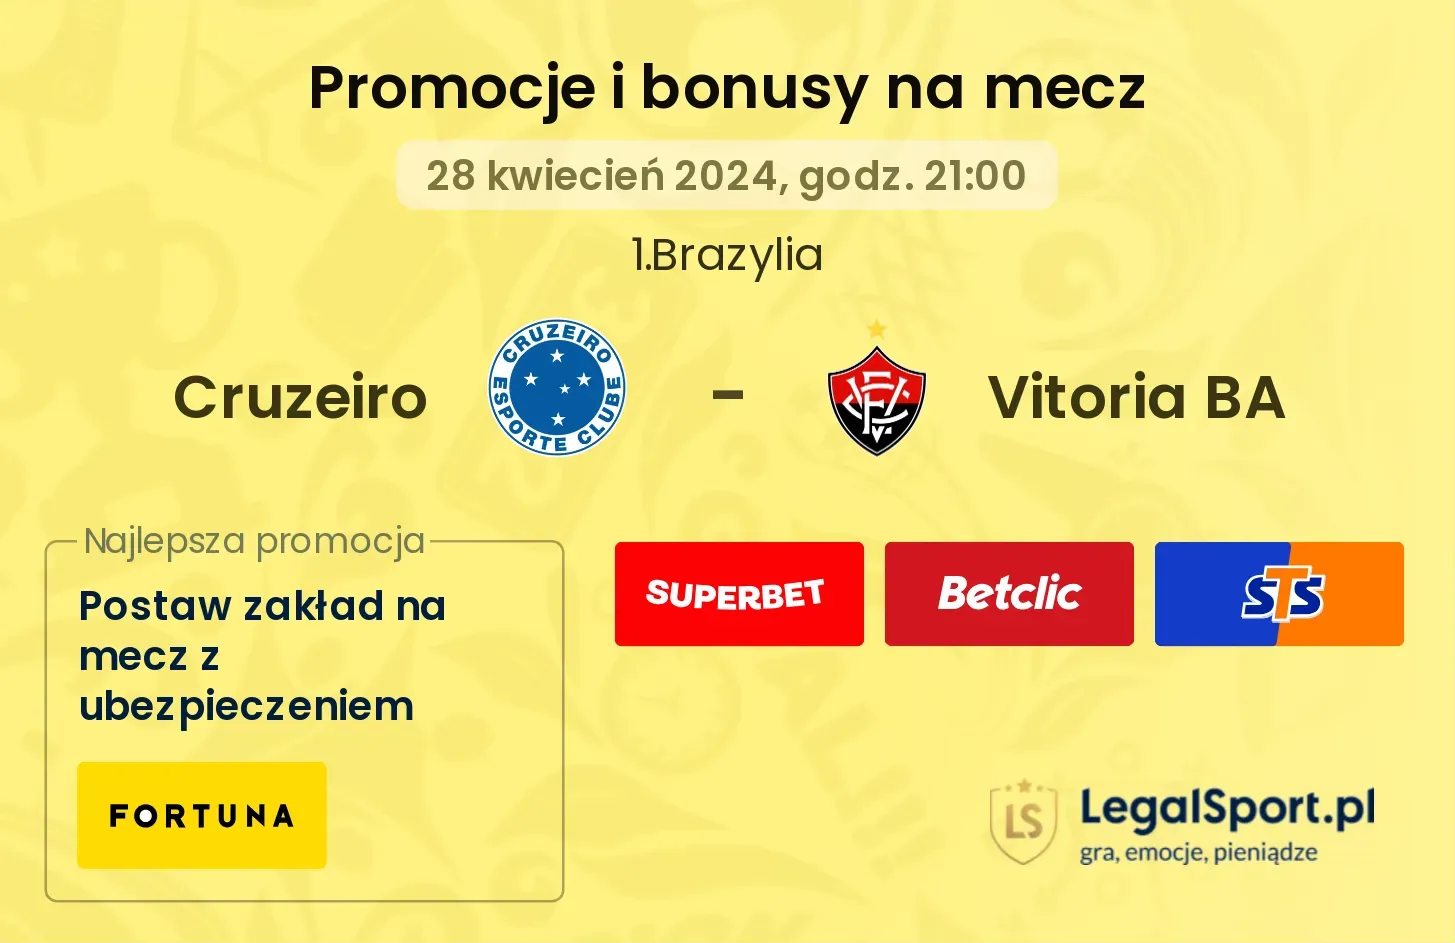 Cruzeiro - Vitoria BA promocje bonusy na mecz